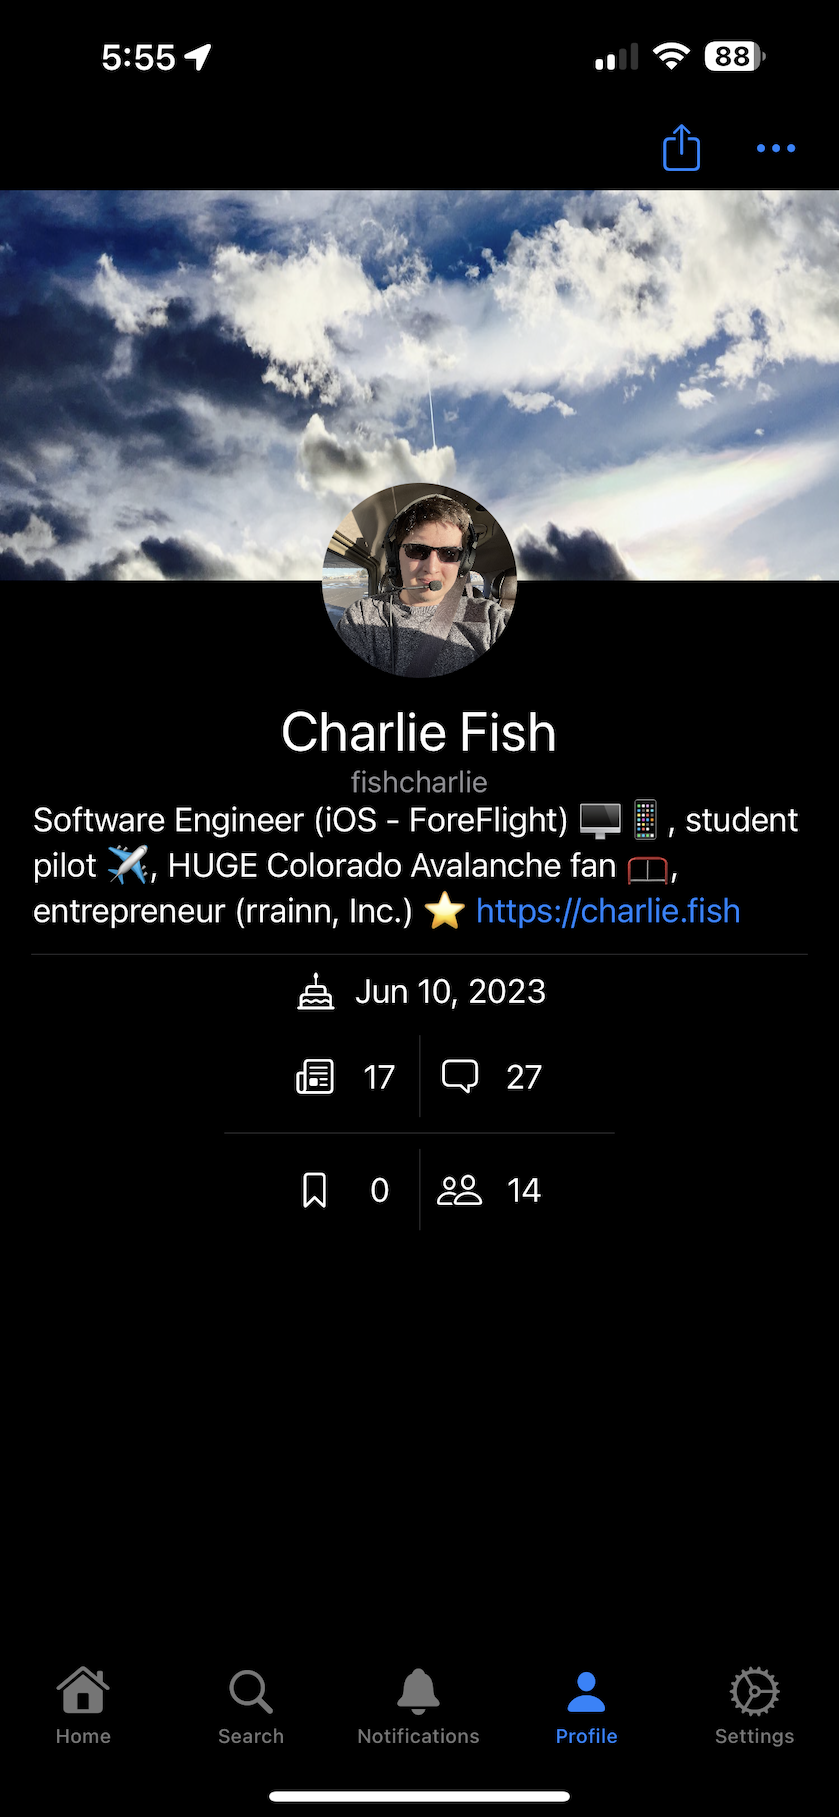 Screenshot of the profile view